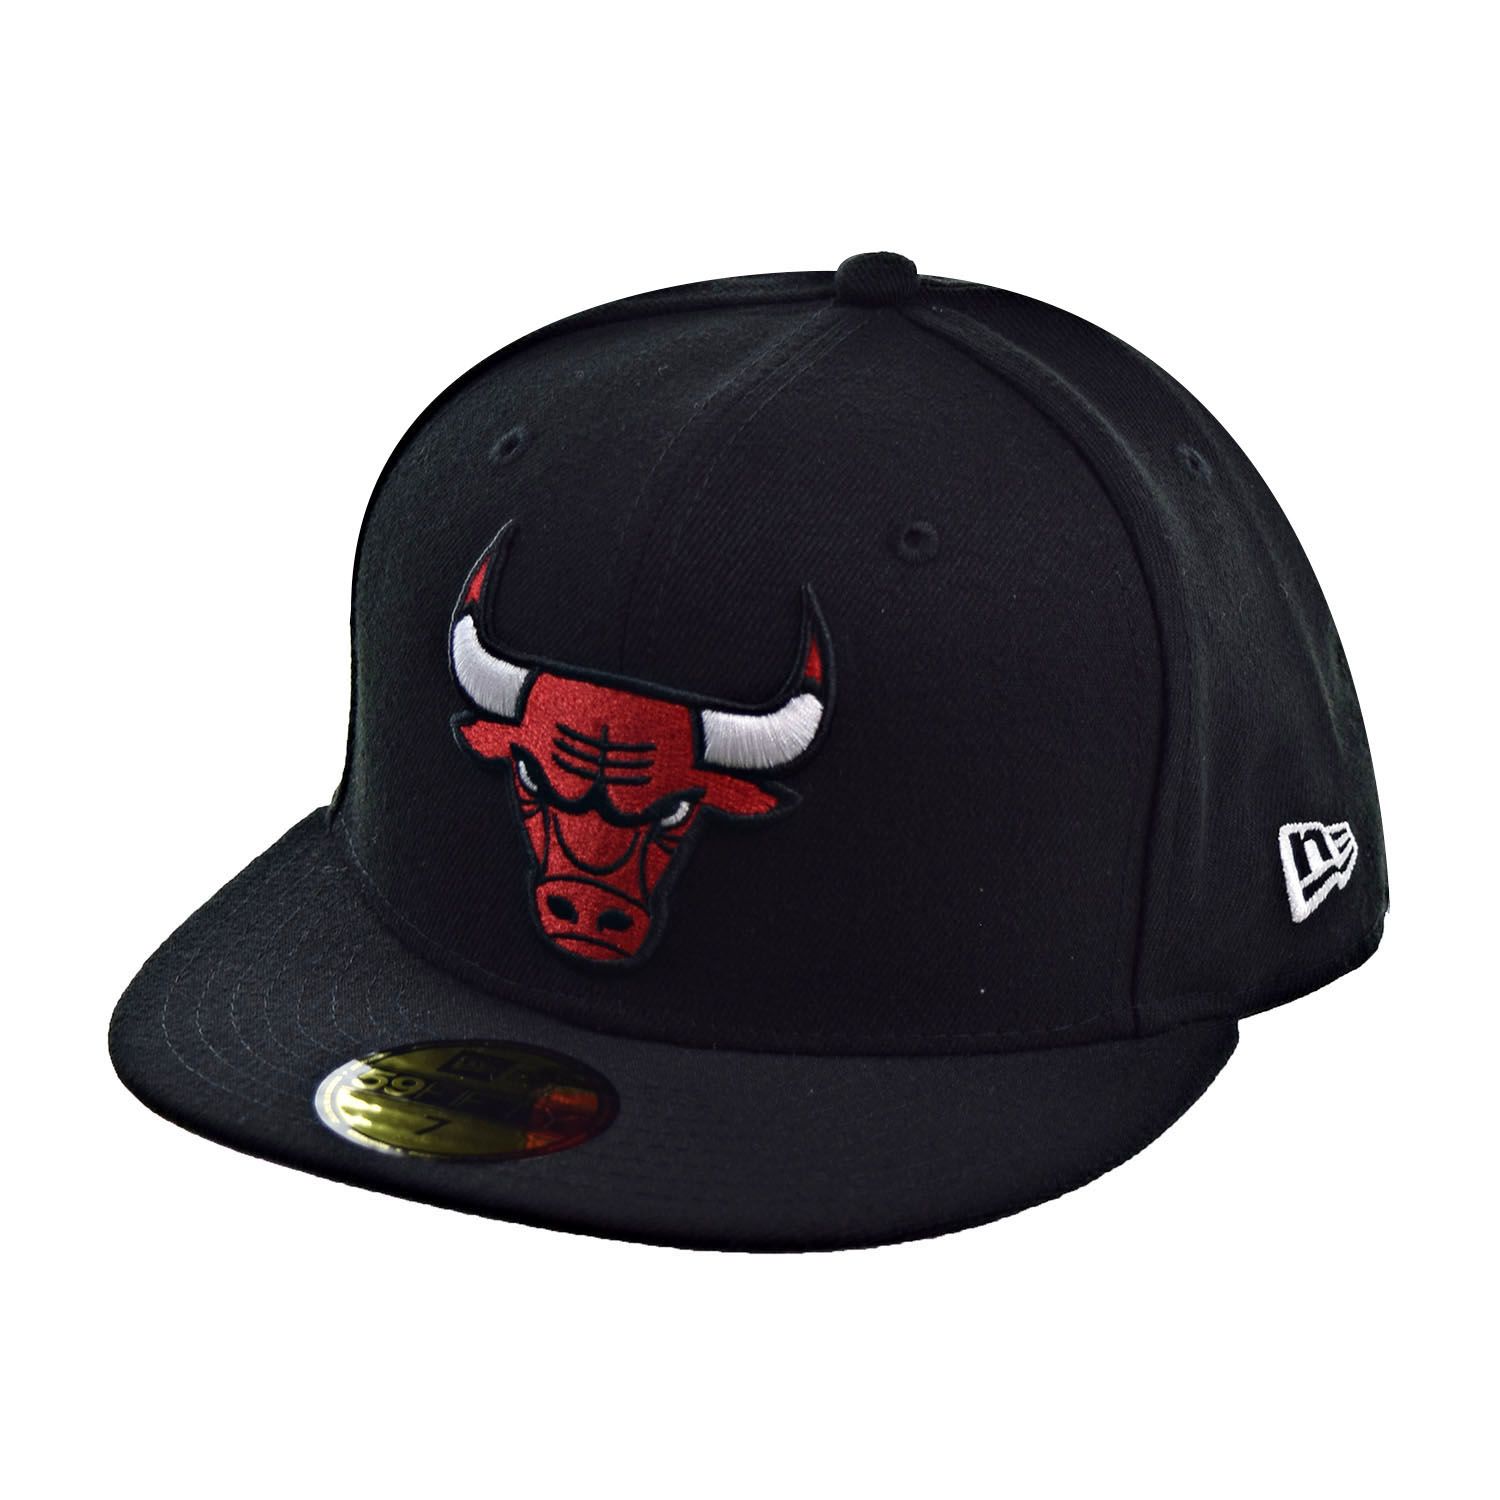 New Era Chicago Bulls 59Fifty Men's Fitted Hat Cap Black-Red-White | eBay